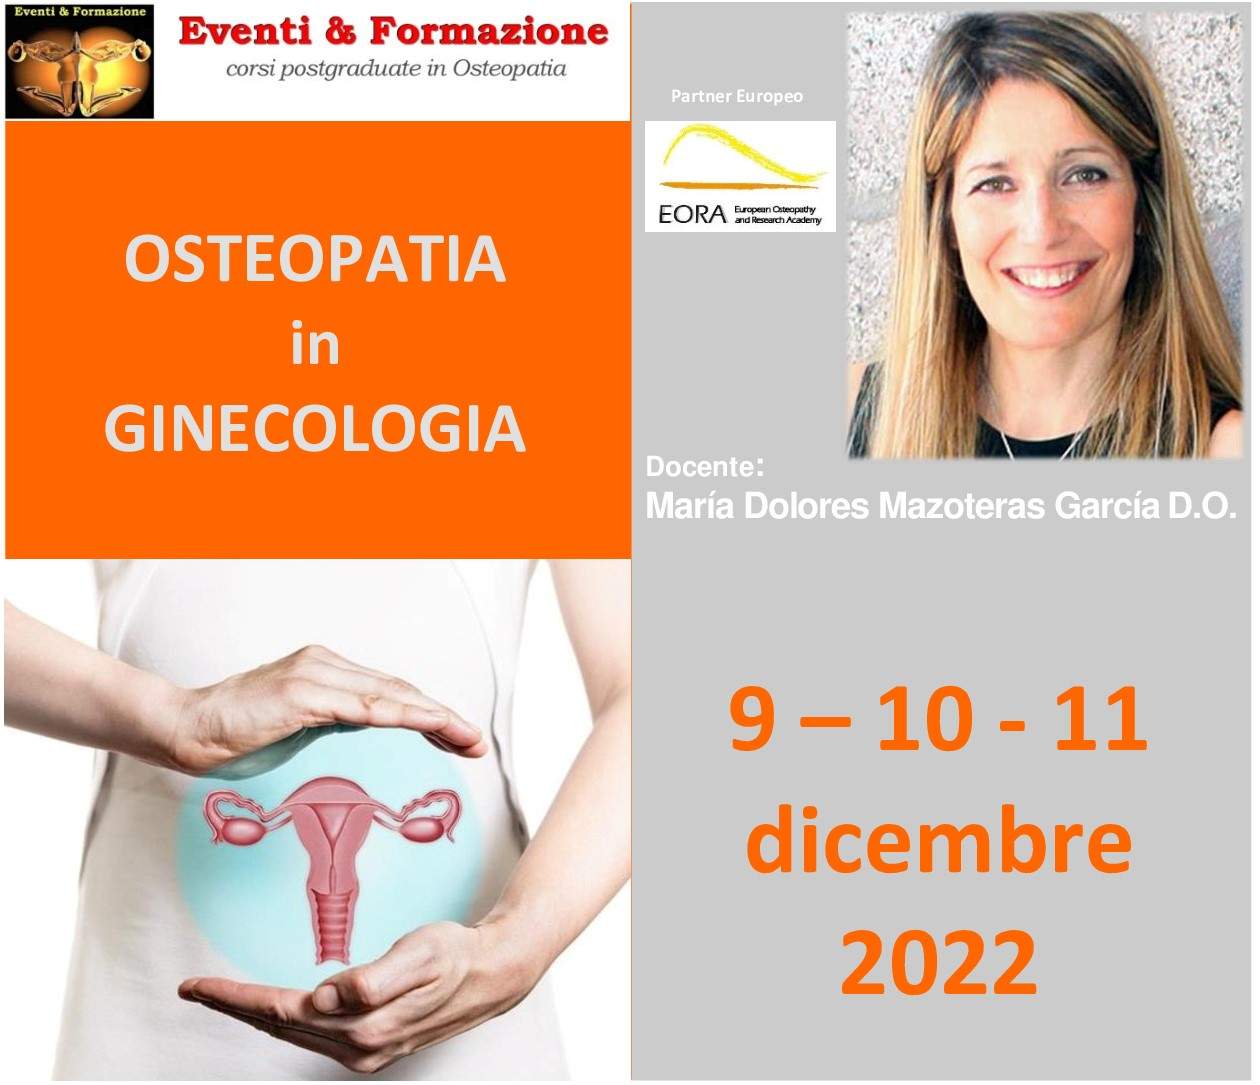 "Corso di osteopatia in Ginecologia"